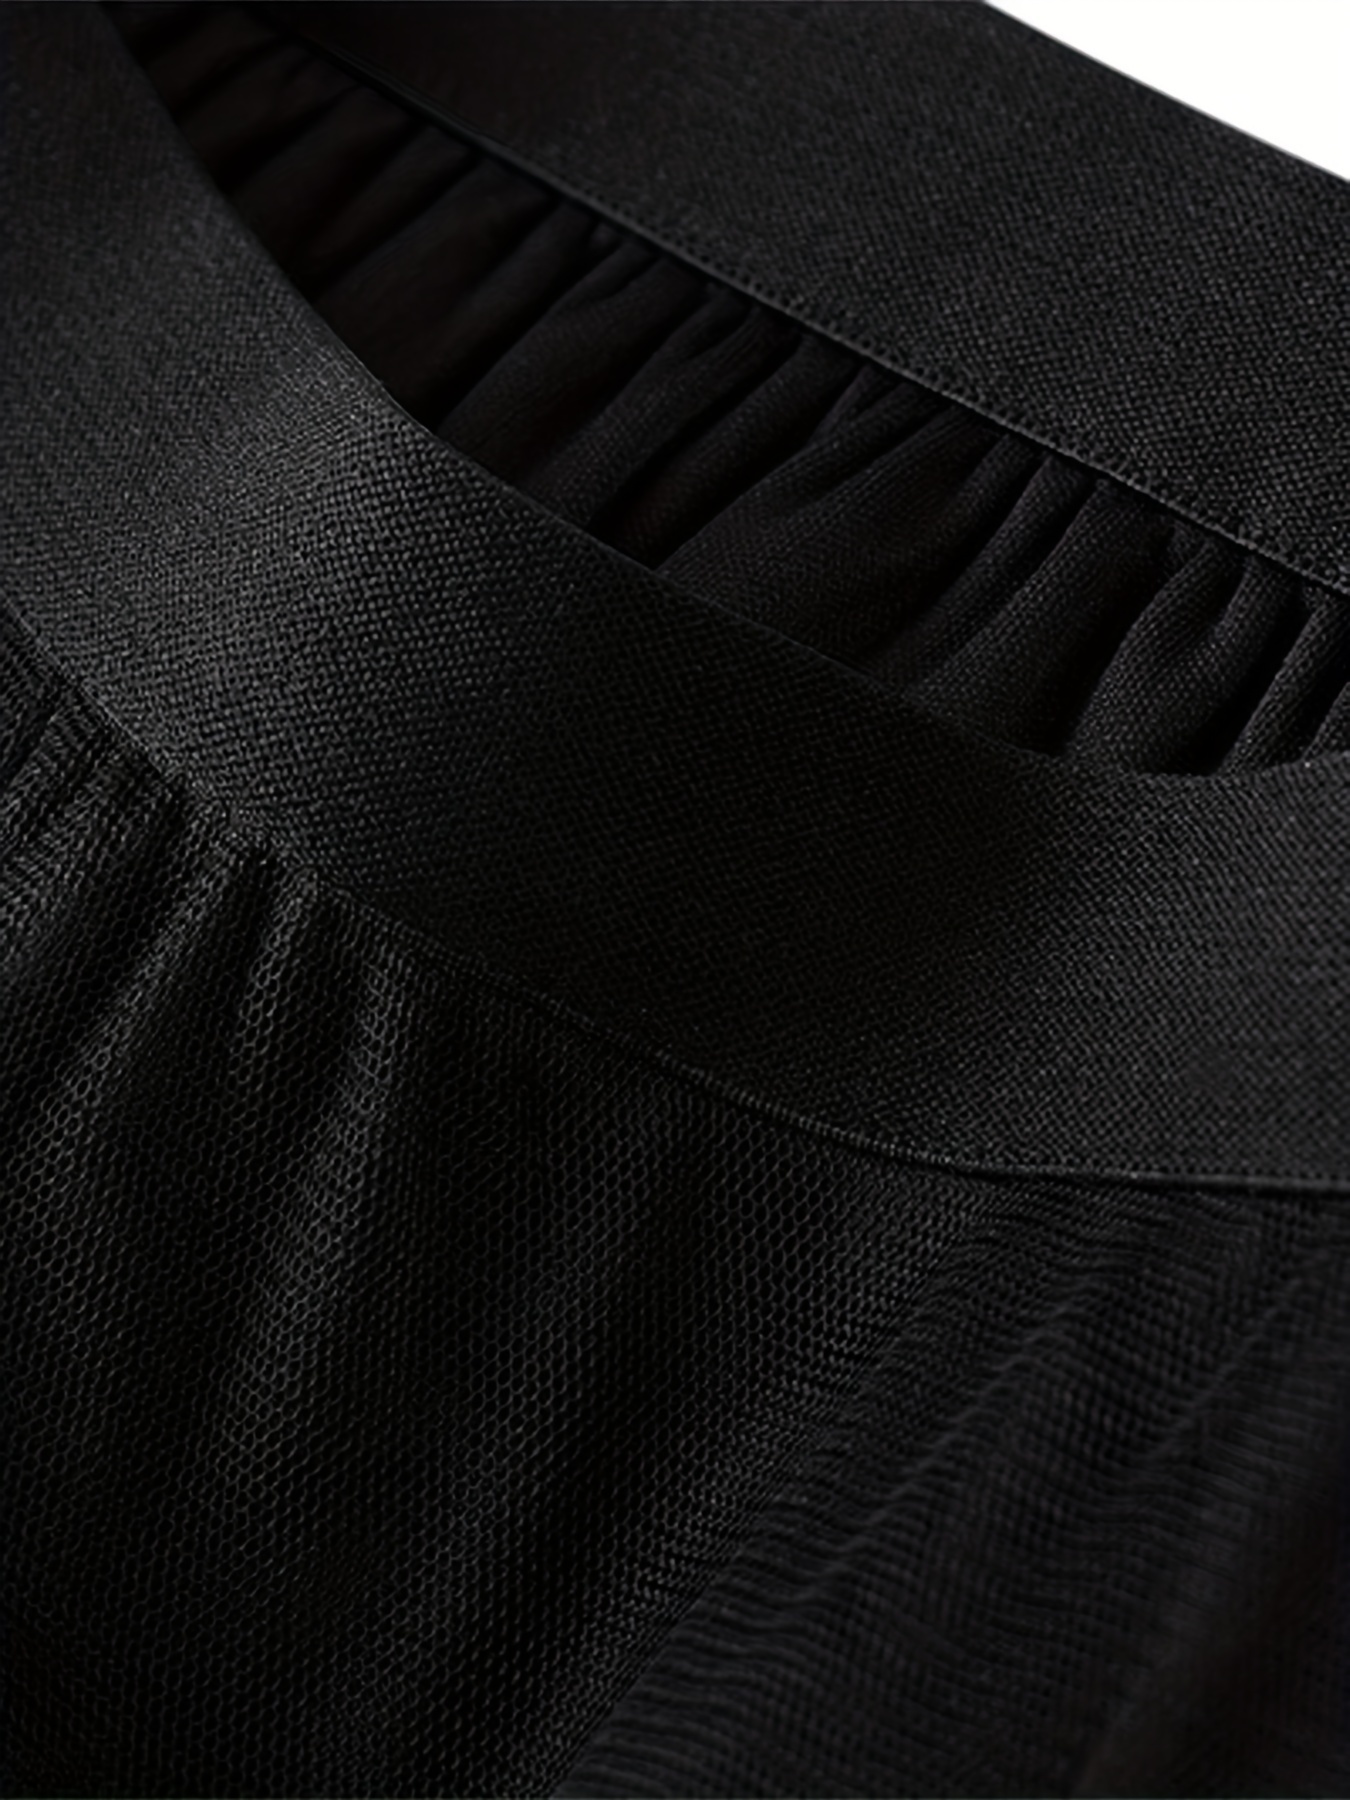 mesh layered ruffle hem skirt casual high waist skirt for spring summer womens clothing